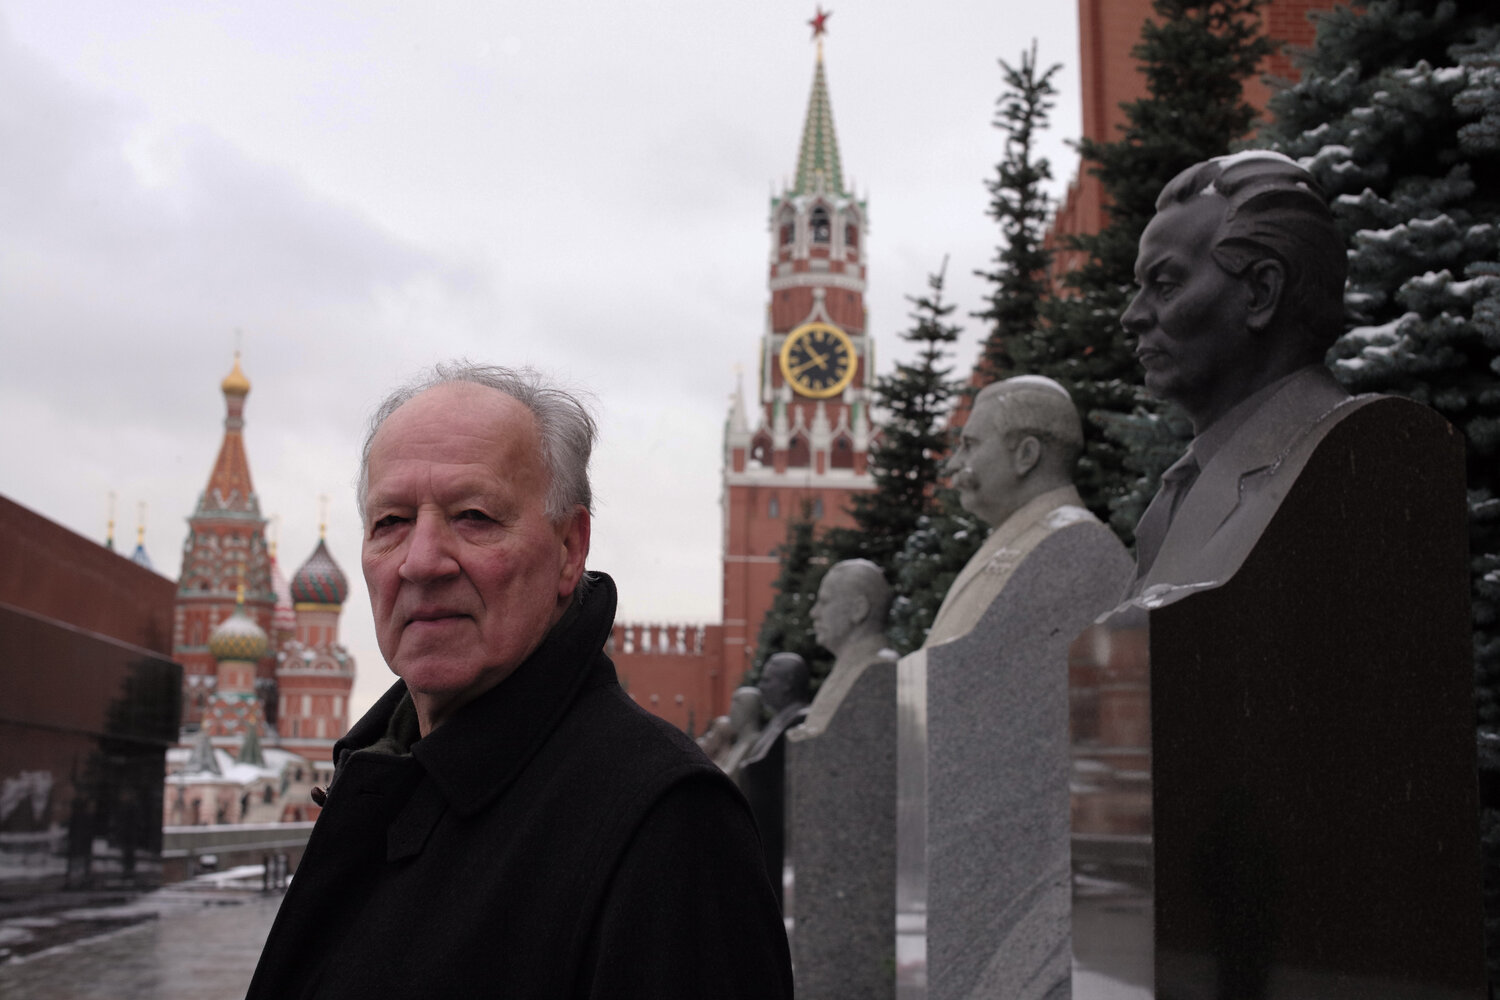 106: Werner Herzog on “Meeting Gorbachev”